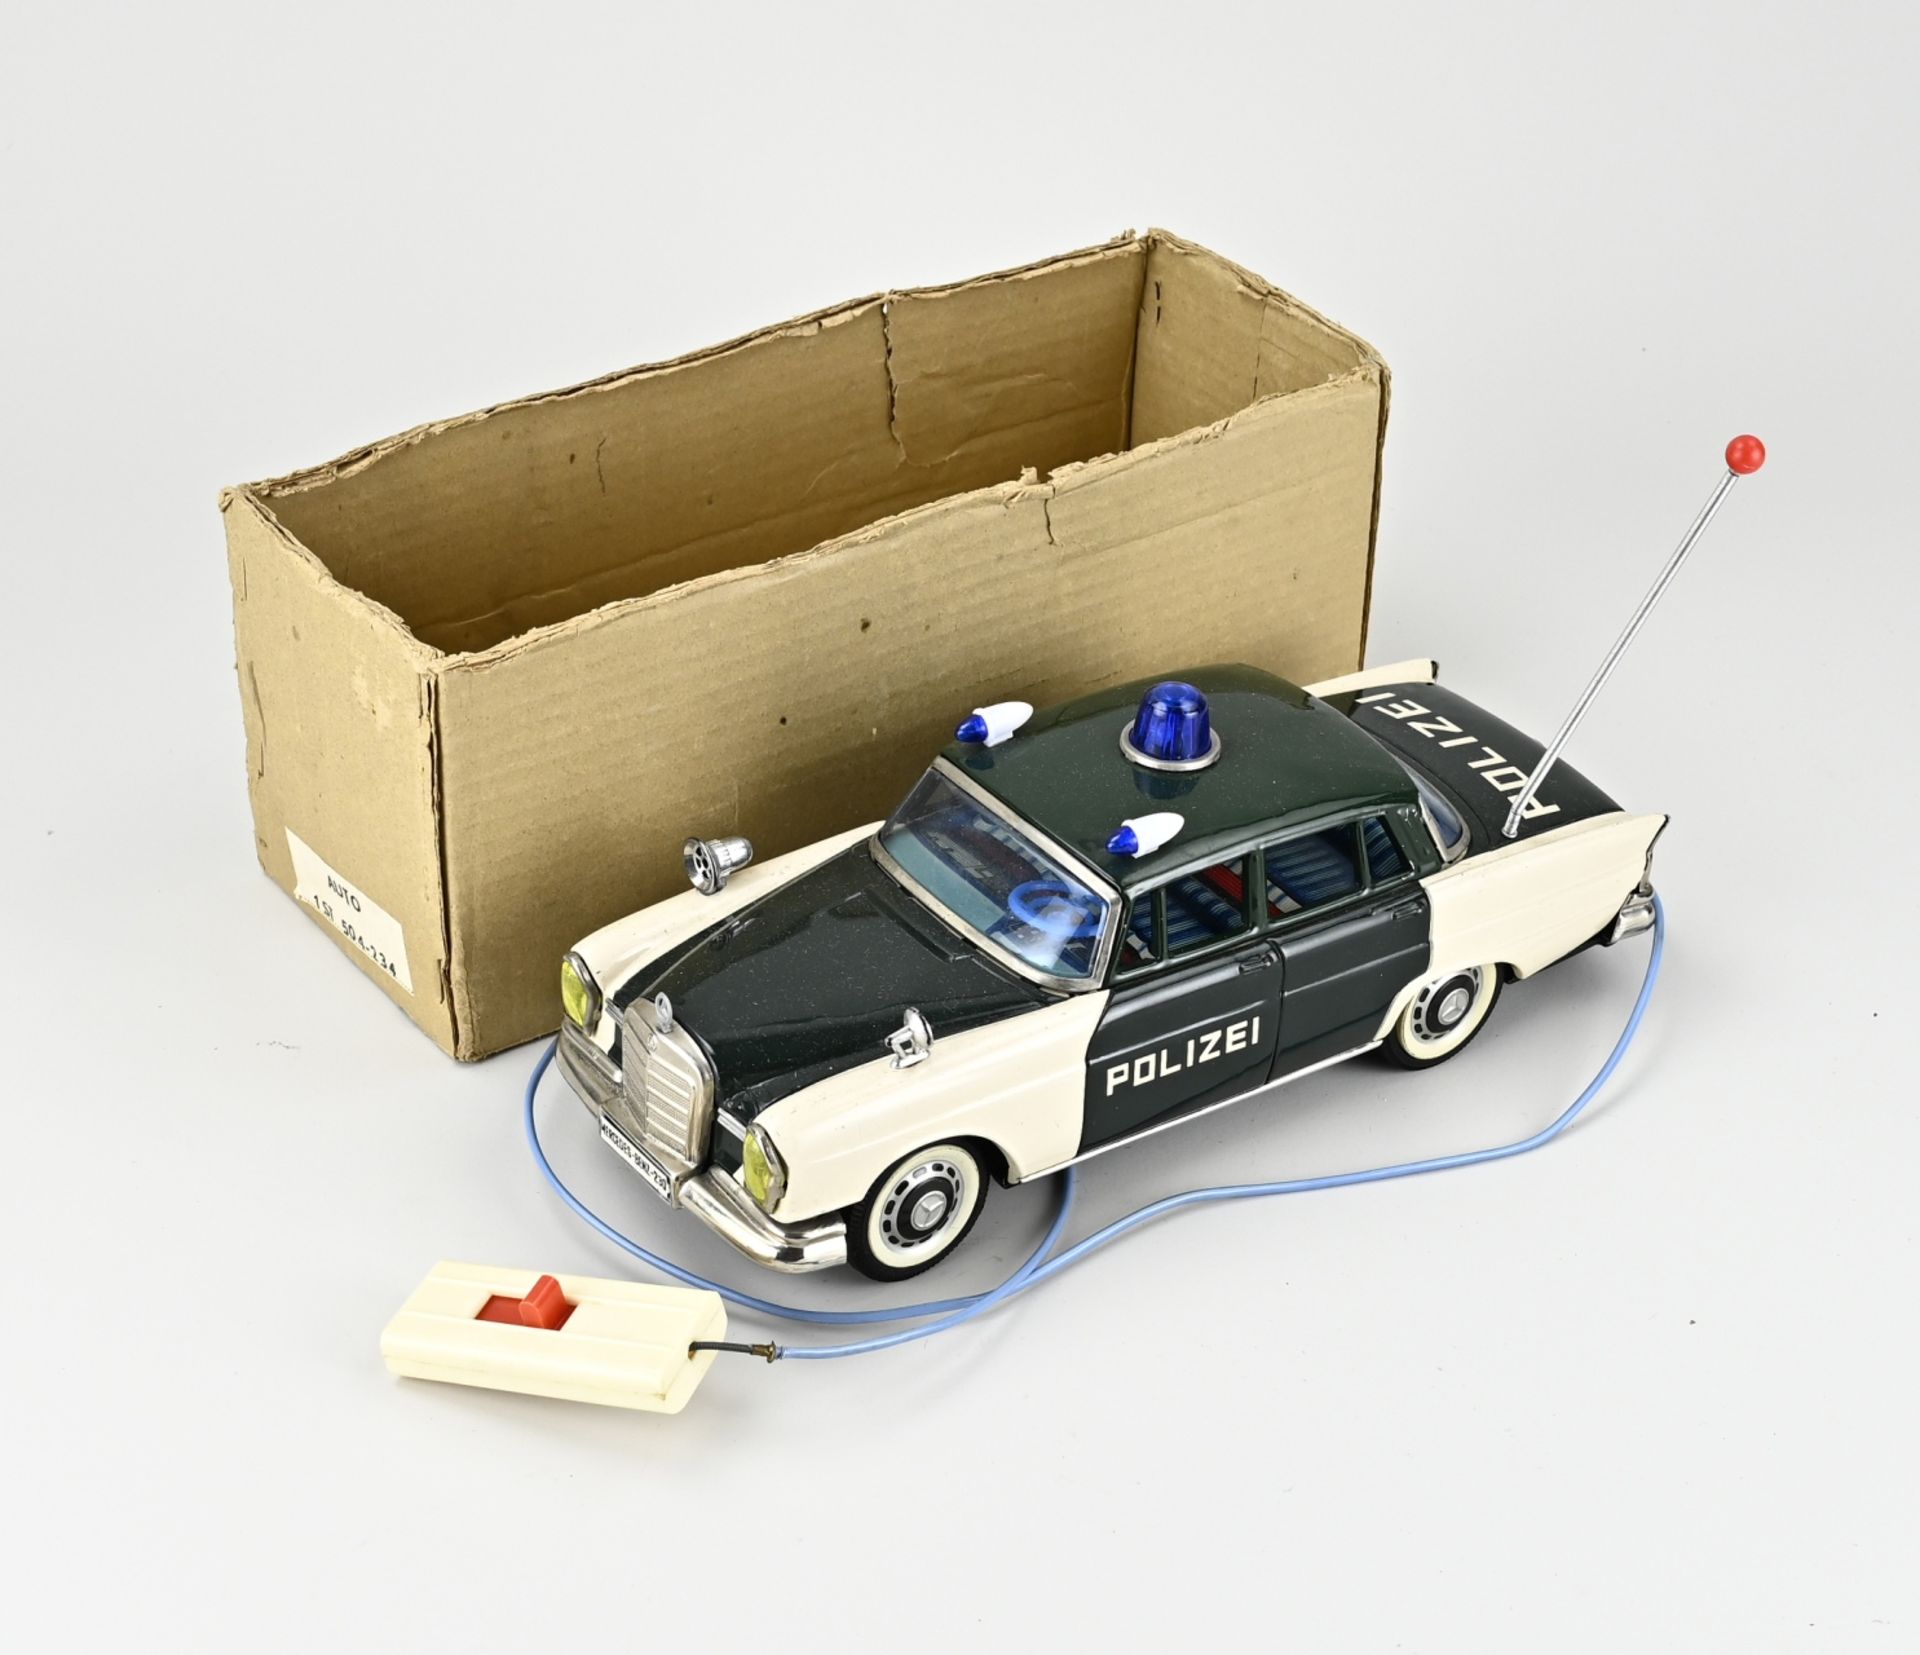 Ichiko Mercedes Benz police car